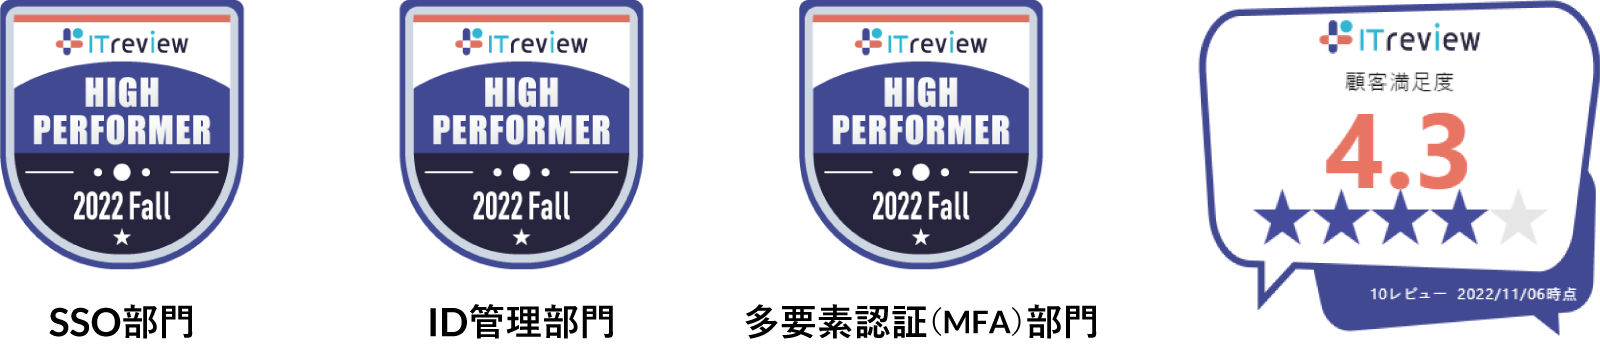 high-performer_2022Fall